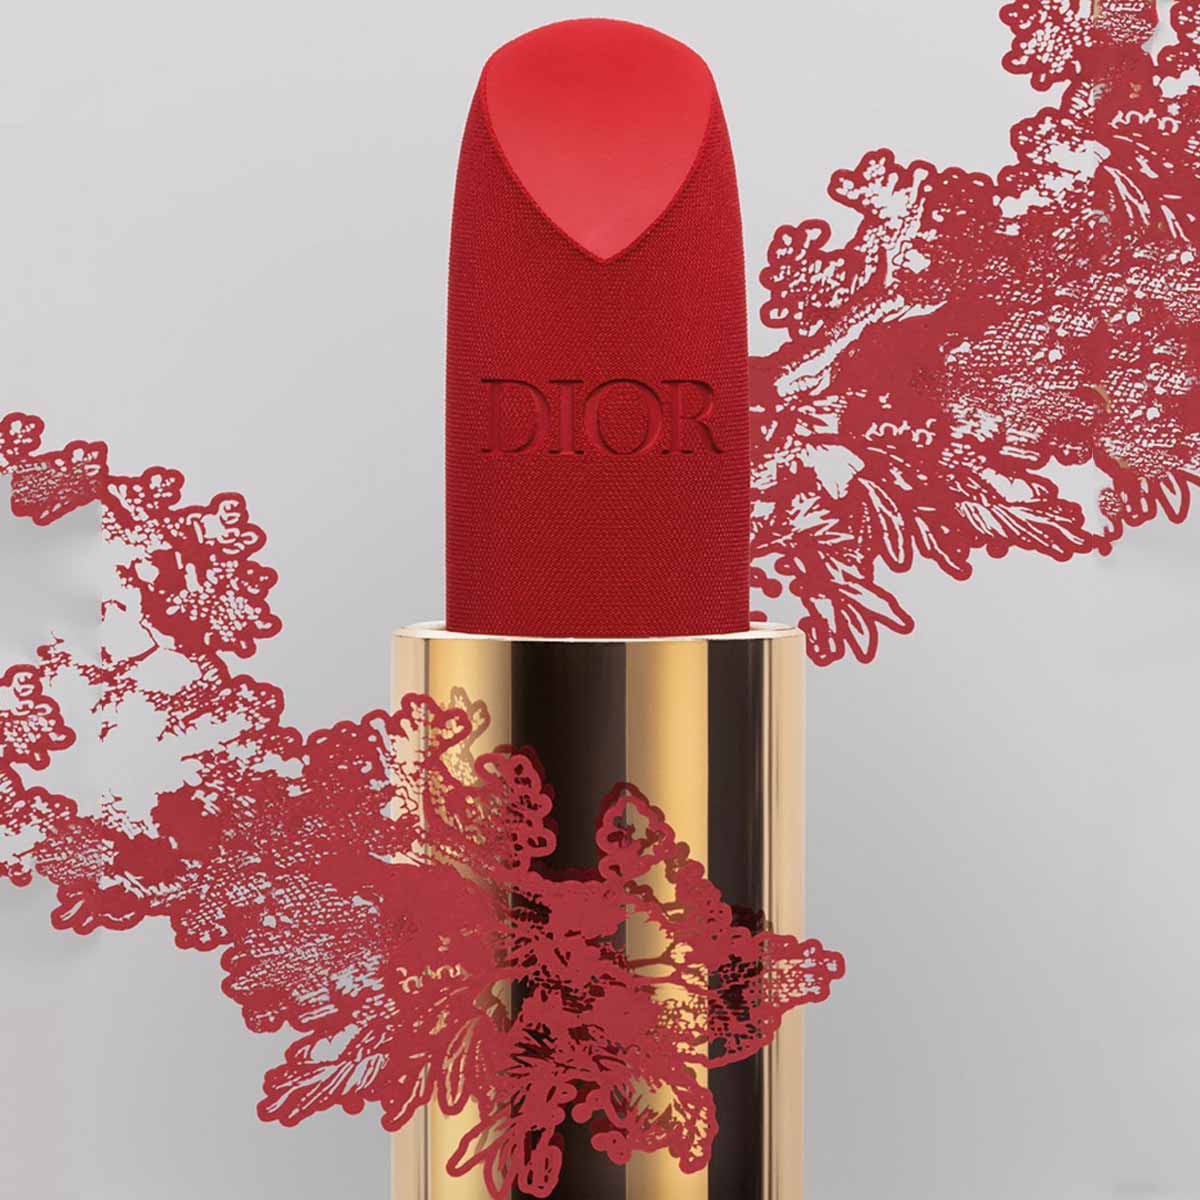 Dior Rouge Premier